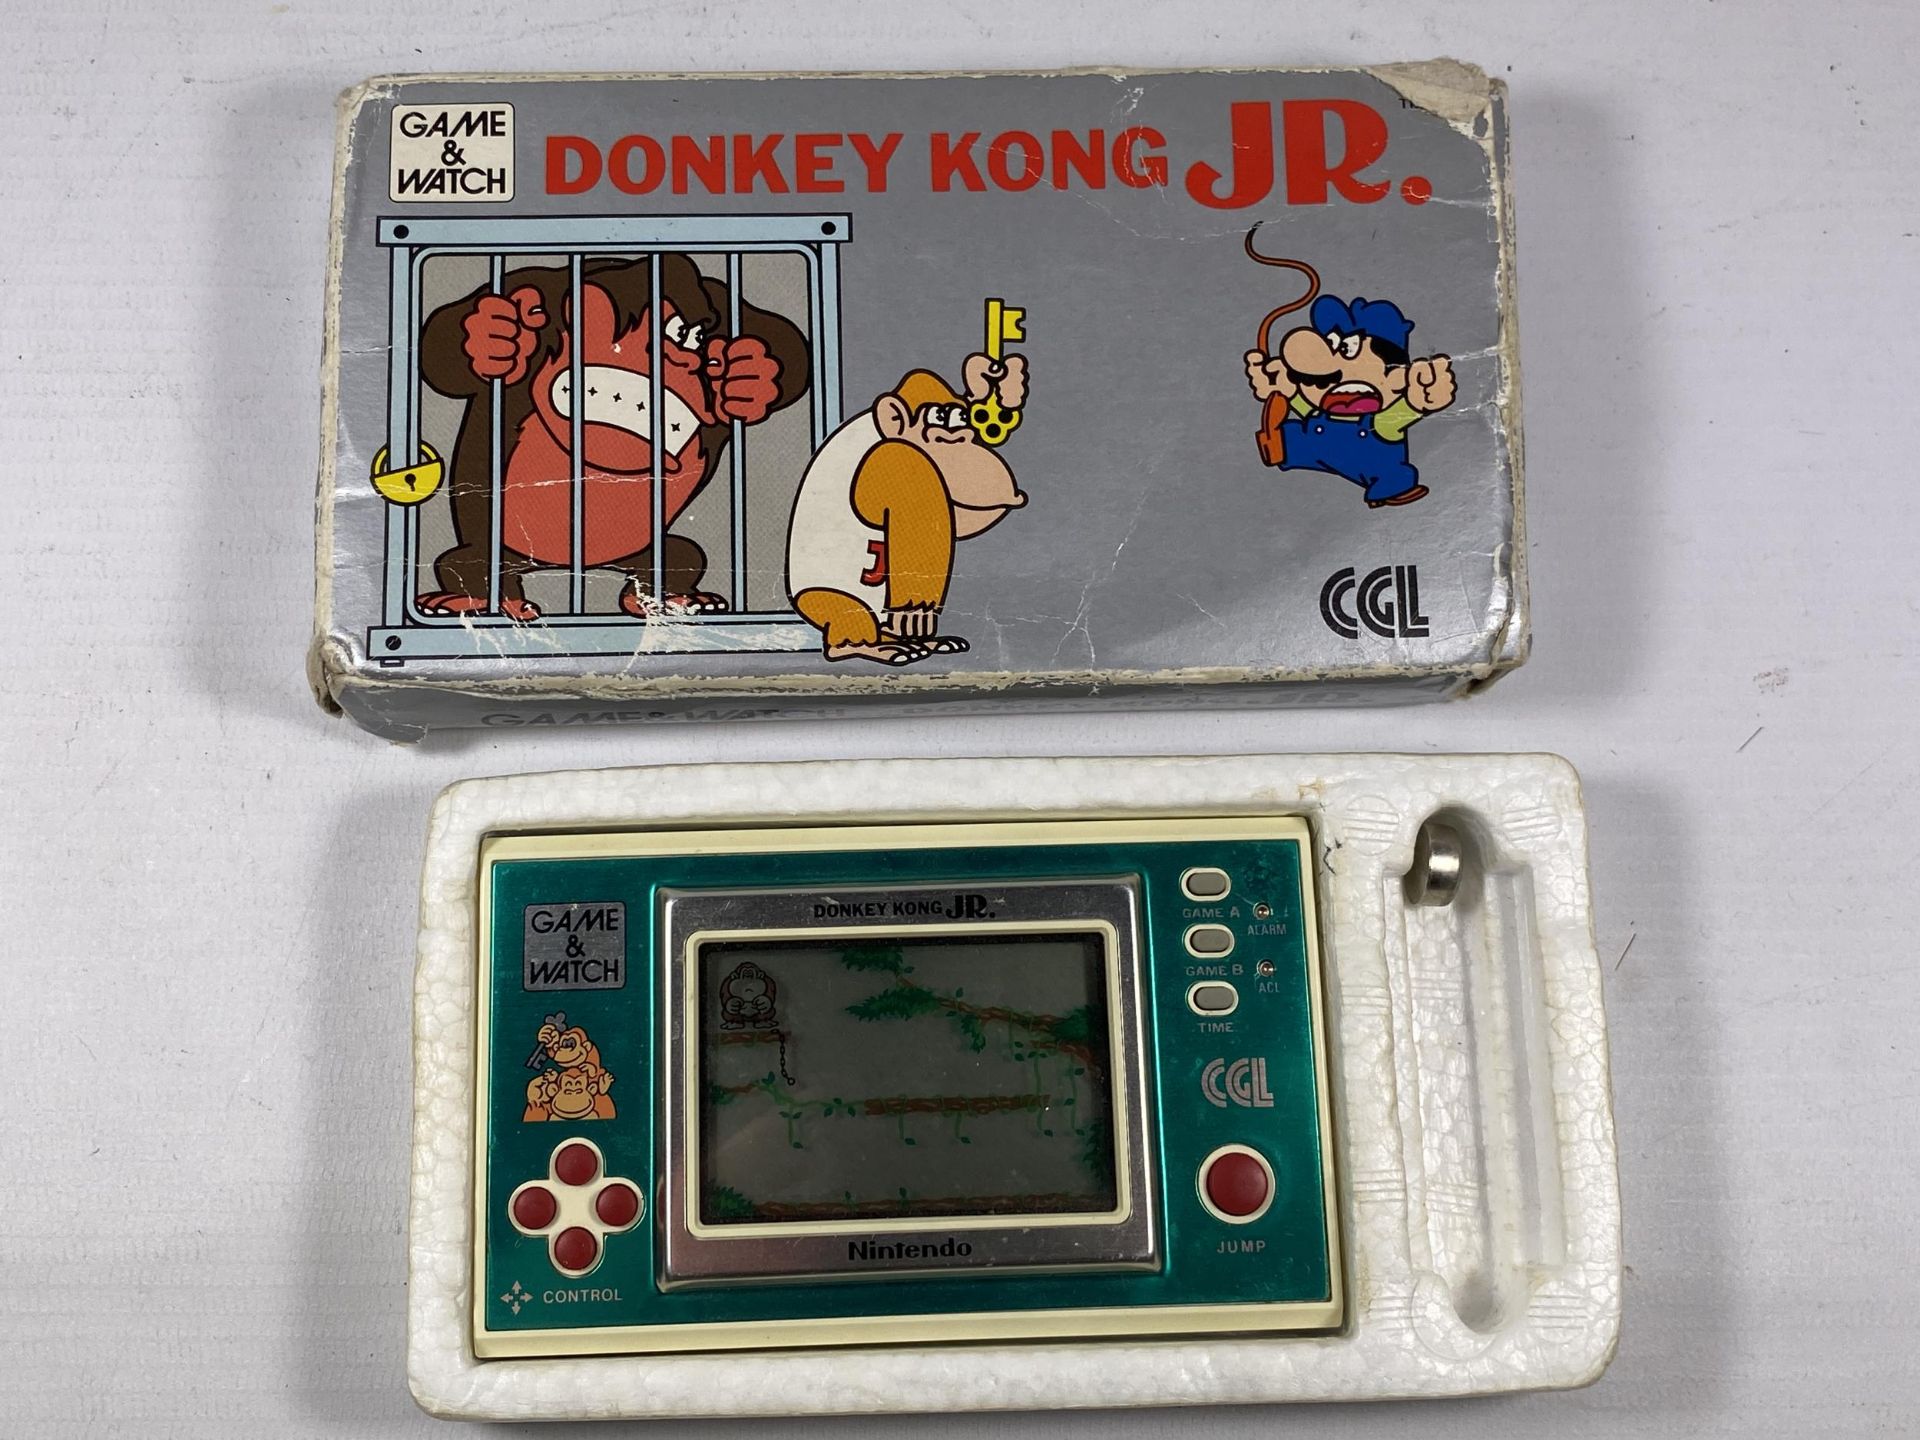 A RETRO BOXED CGL NINTENDO DONKEY KONG JR GAME & WATCH